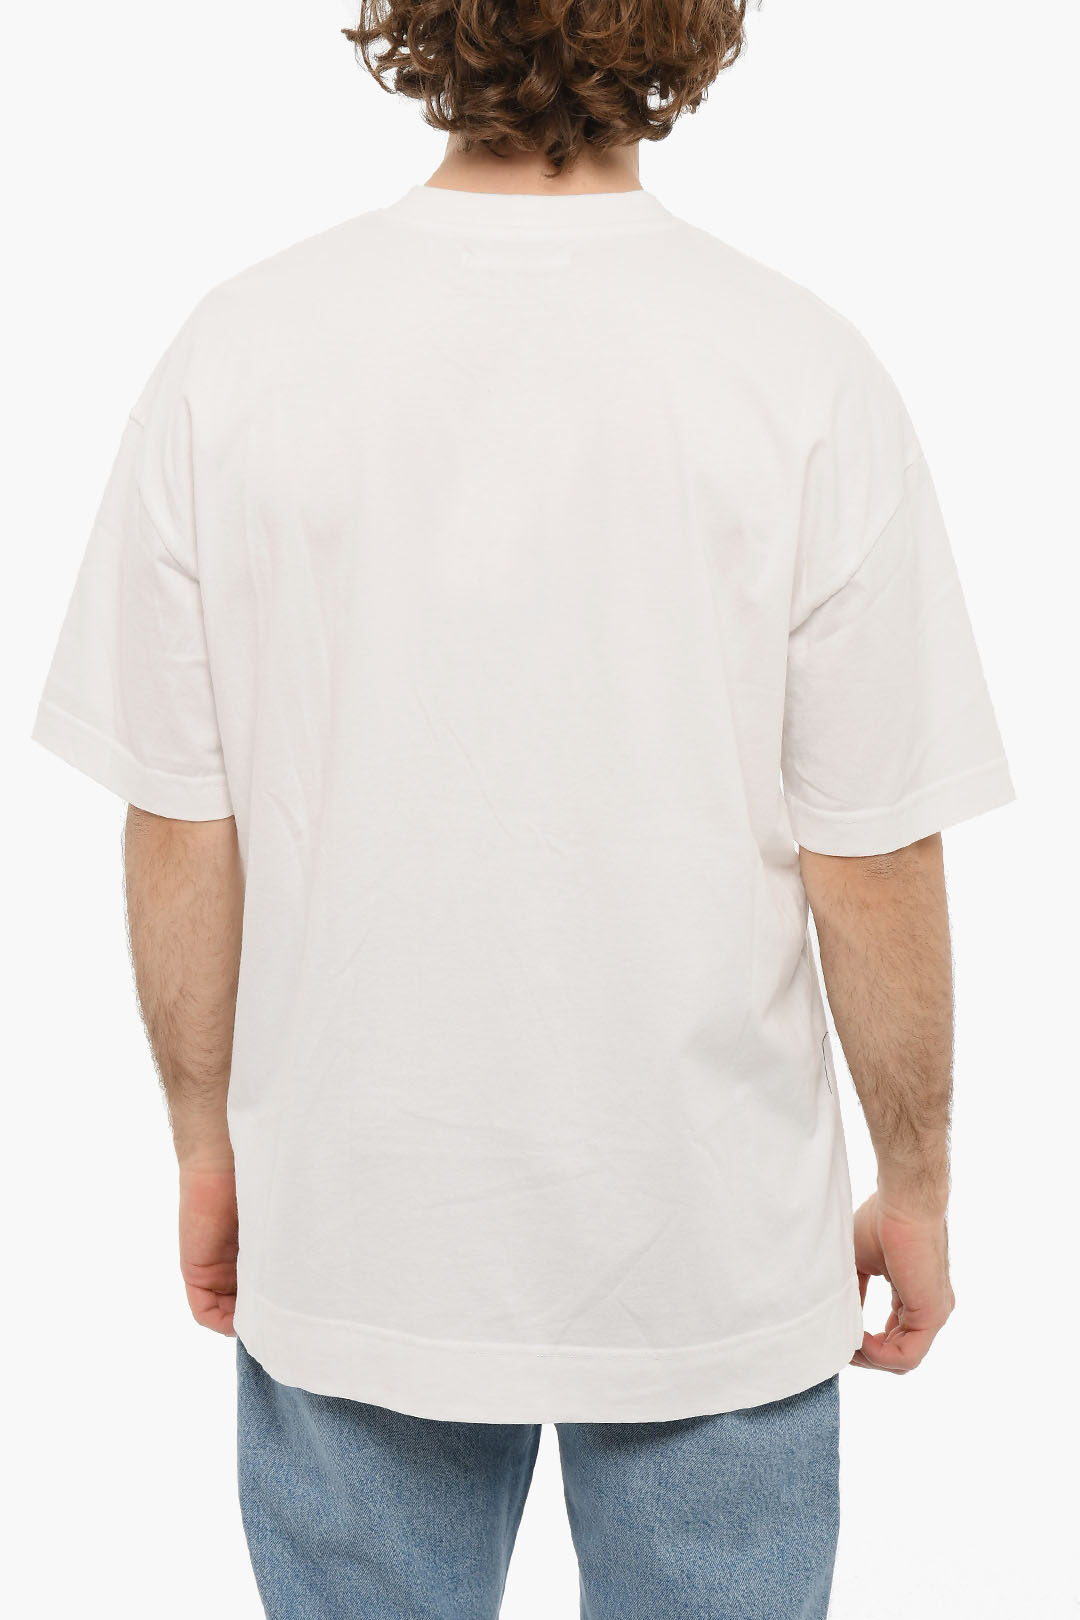 Crewneck RATAN Short Sleeved T-shirt With Breast Pocket